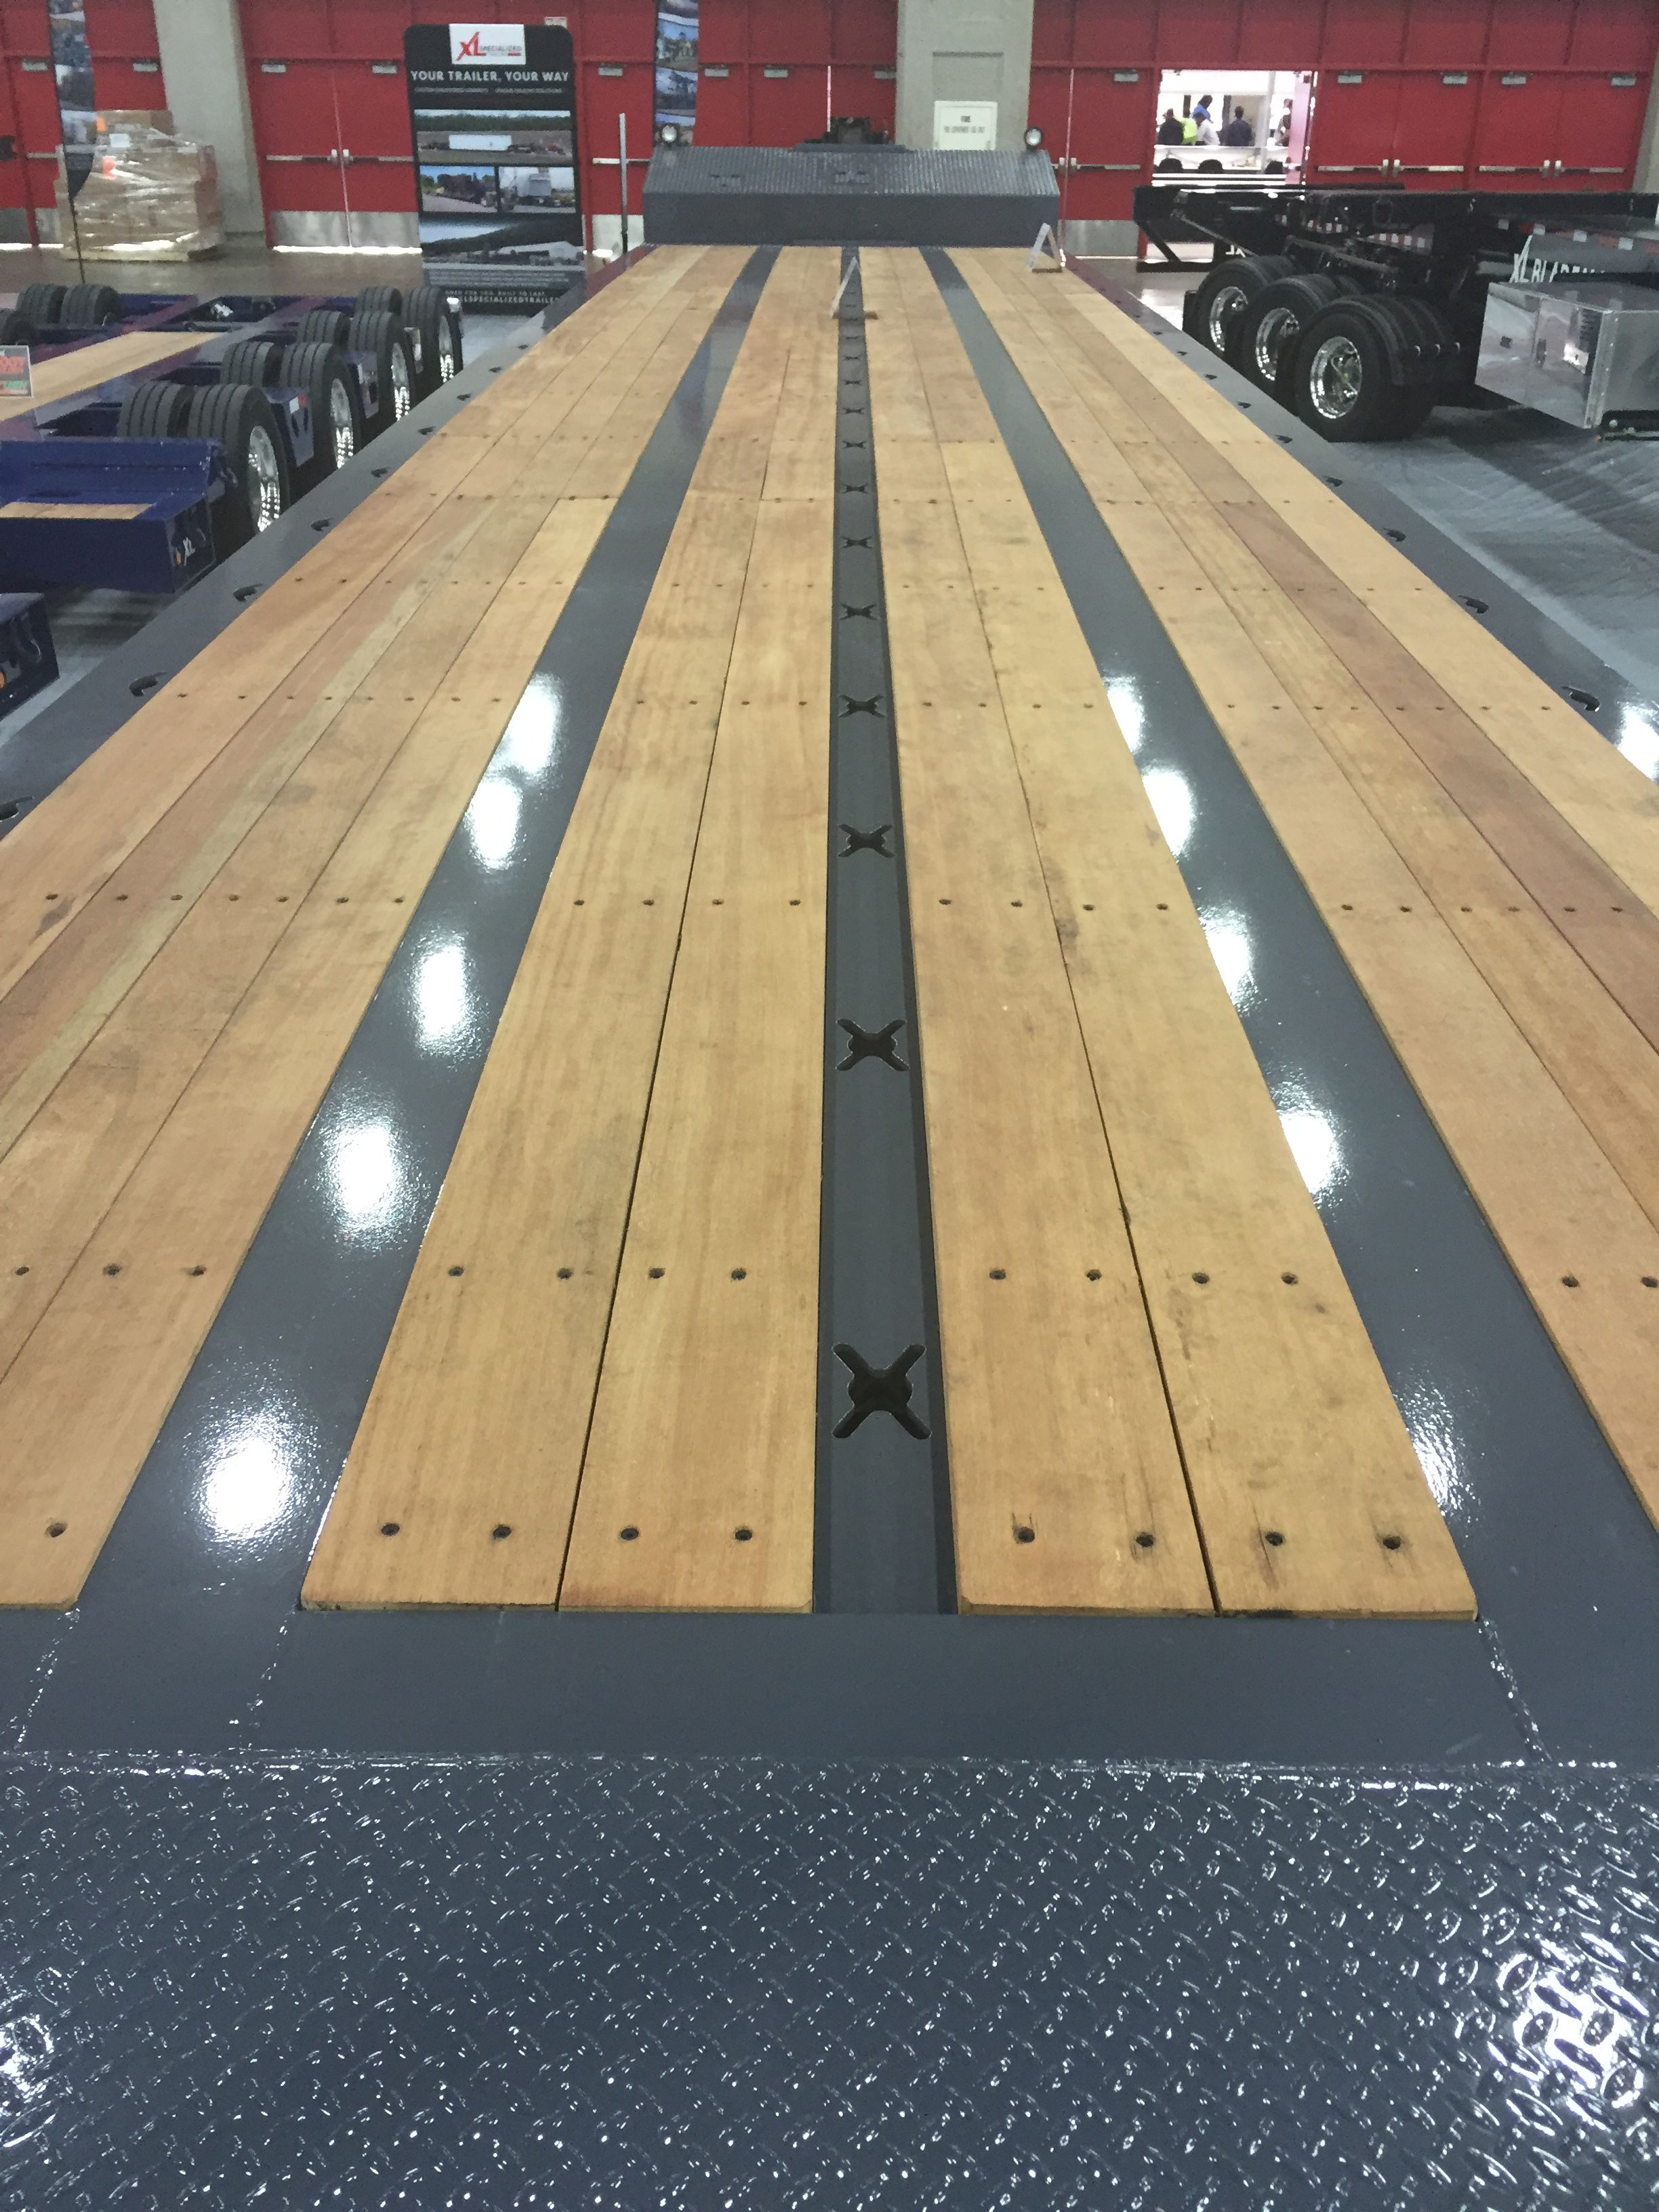 Equipment Hauler Trailer Wood Deck Installation Trailer throughout sizing 2448 X 3264